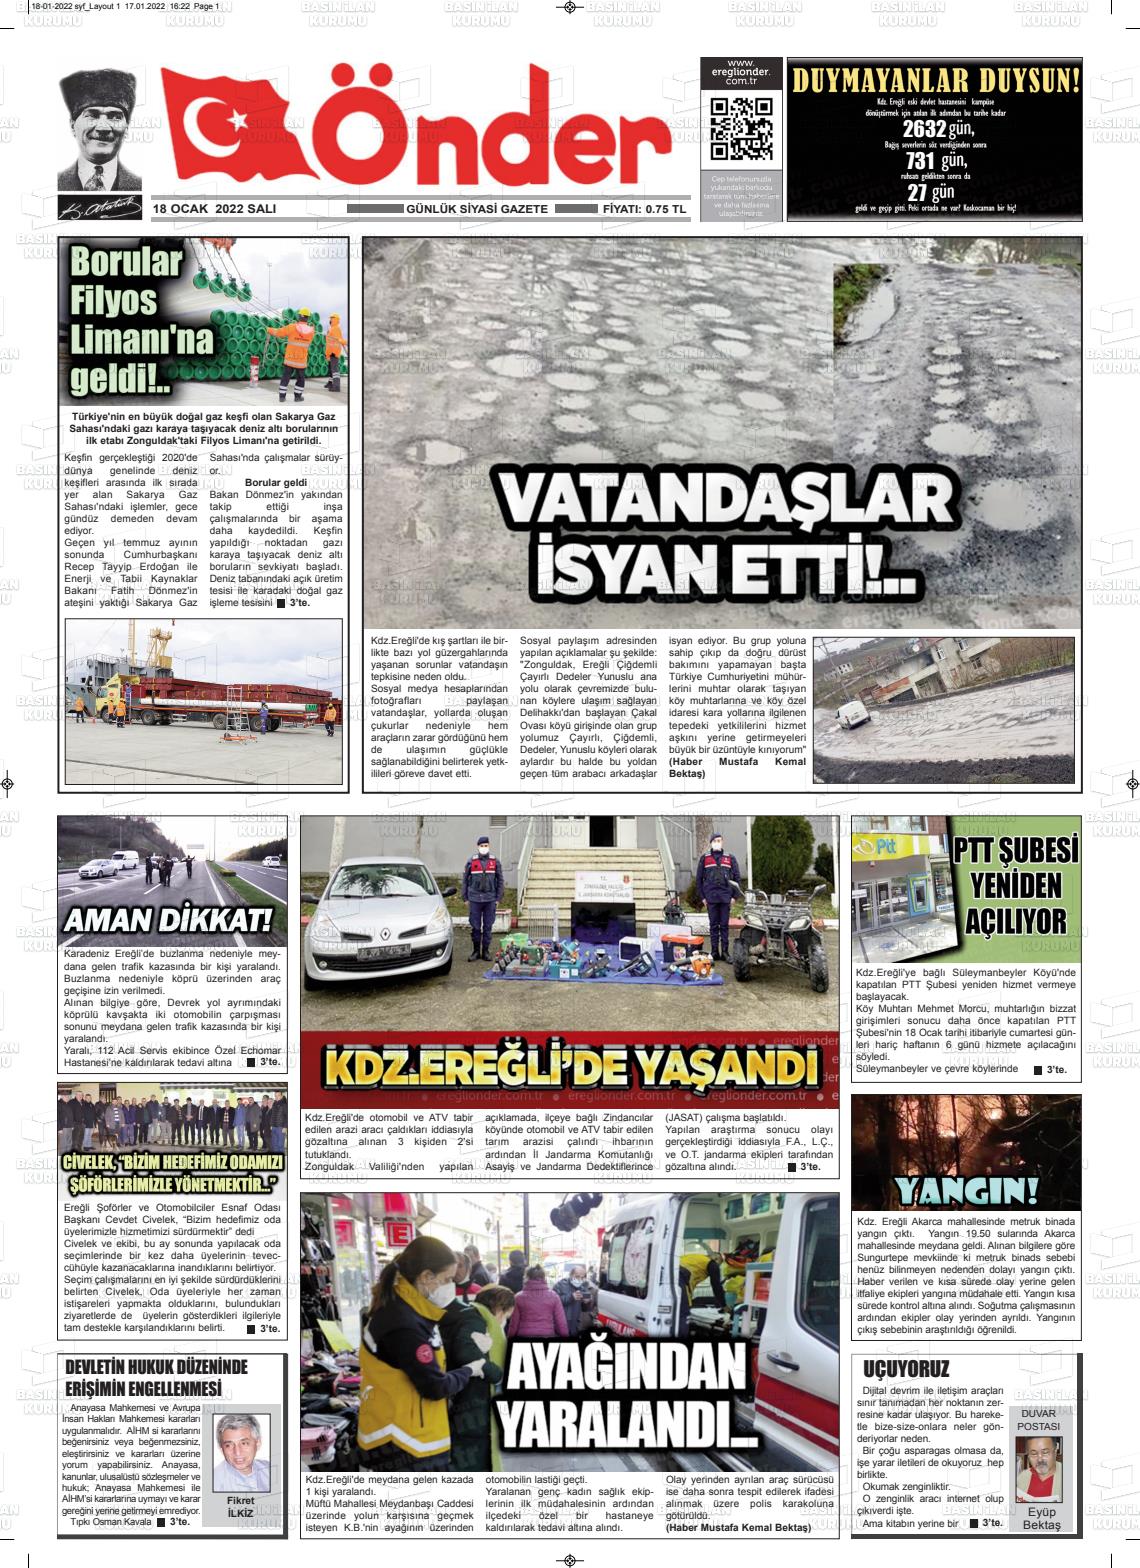 18 Ocak 2022 Zonguldak Önder Gazete Manşeti